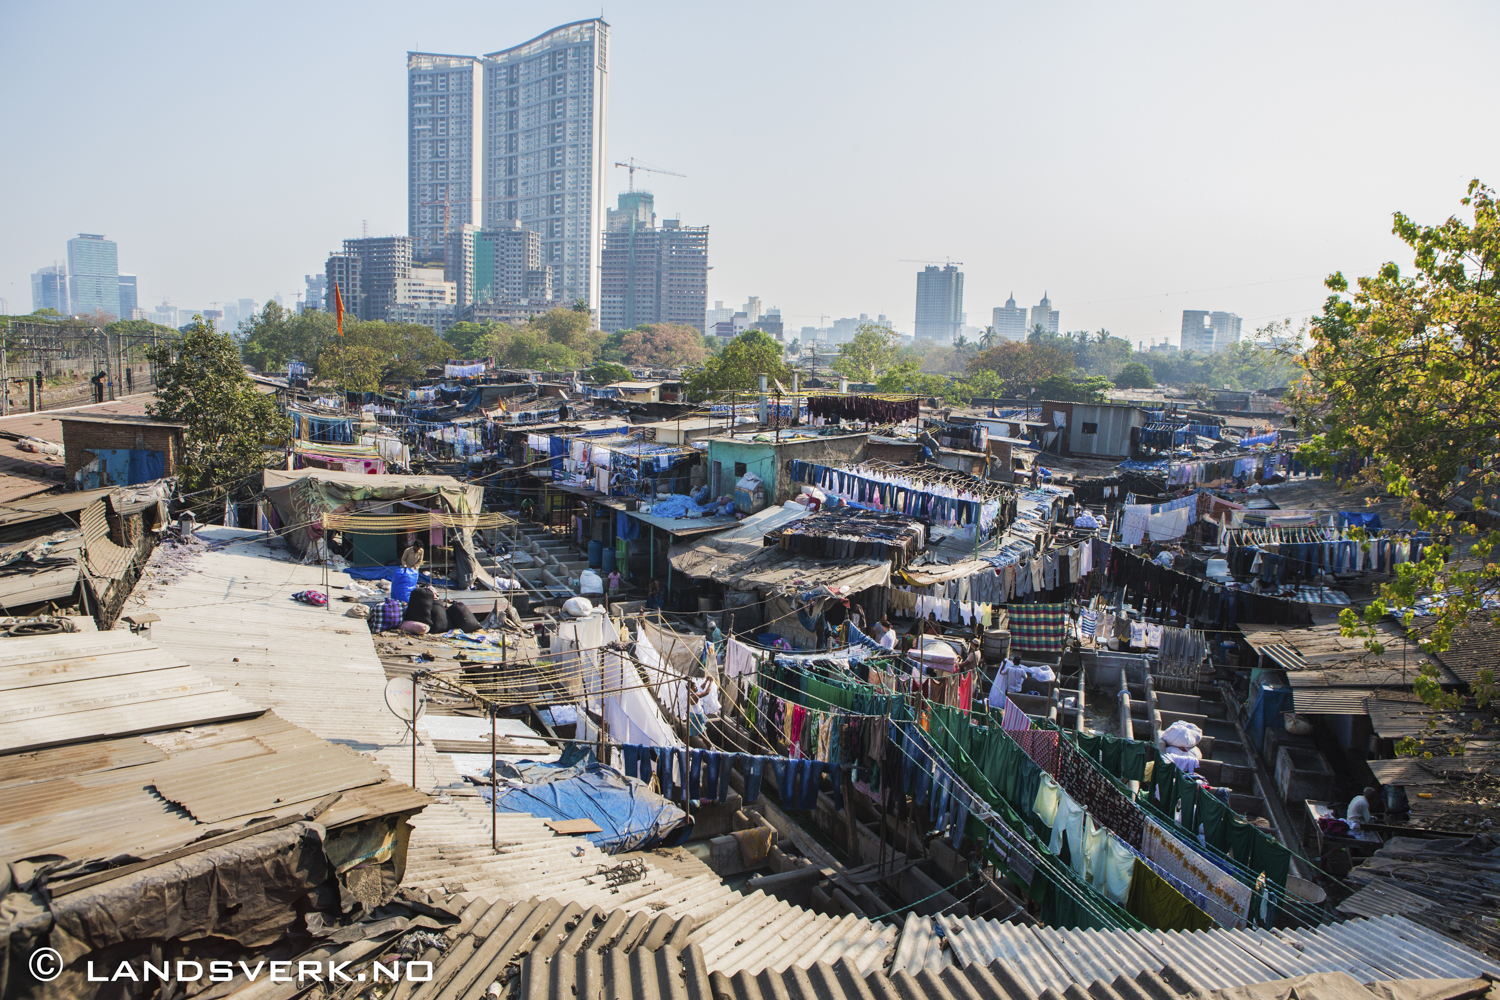 Mahalaxmi Dhobi Ghat. The biggest laundromat in the city. Mumbai, India. 

(Canon EOS 5D Mark III / Canon EF 24-70mm f/2.8 L USM)